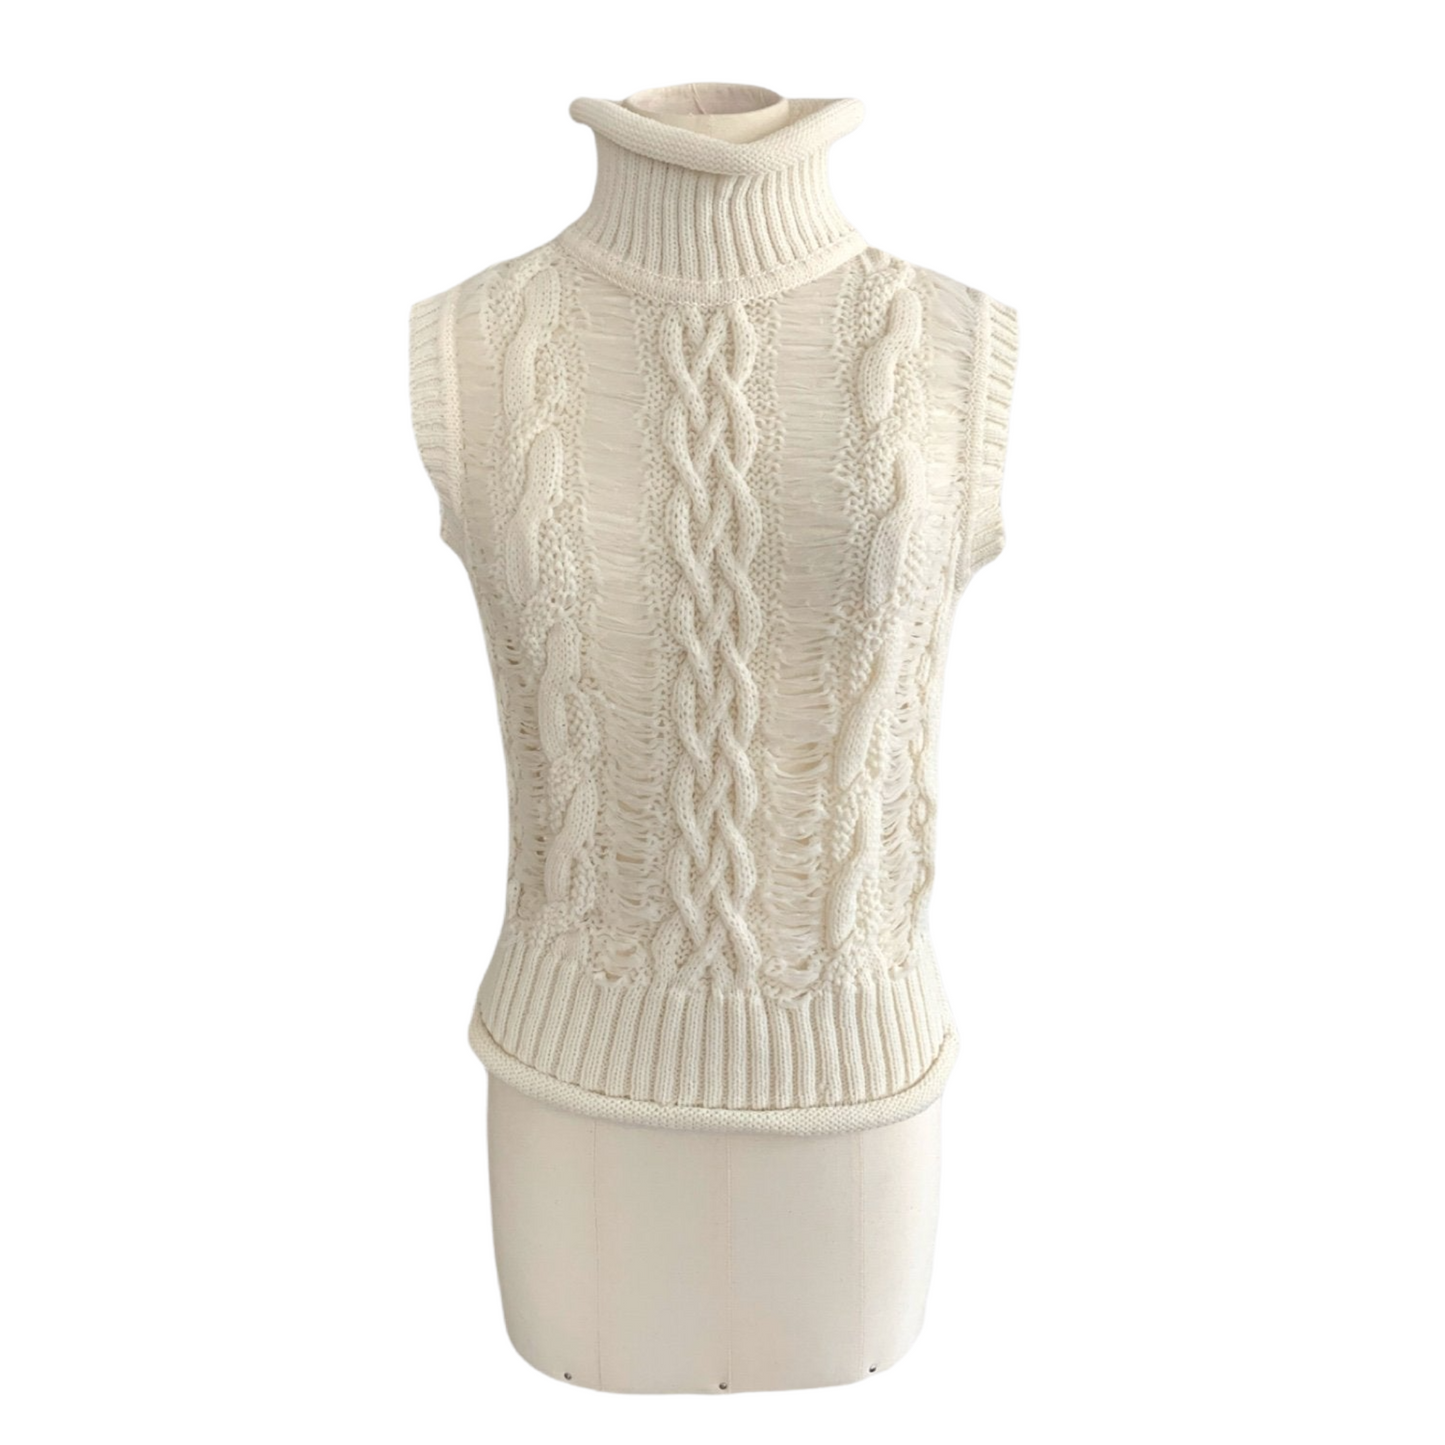 Dior sleeveless turtleneck sweater - L - 2000s